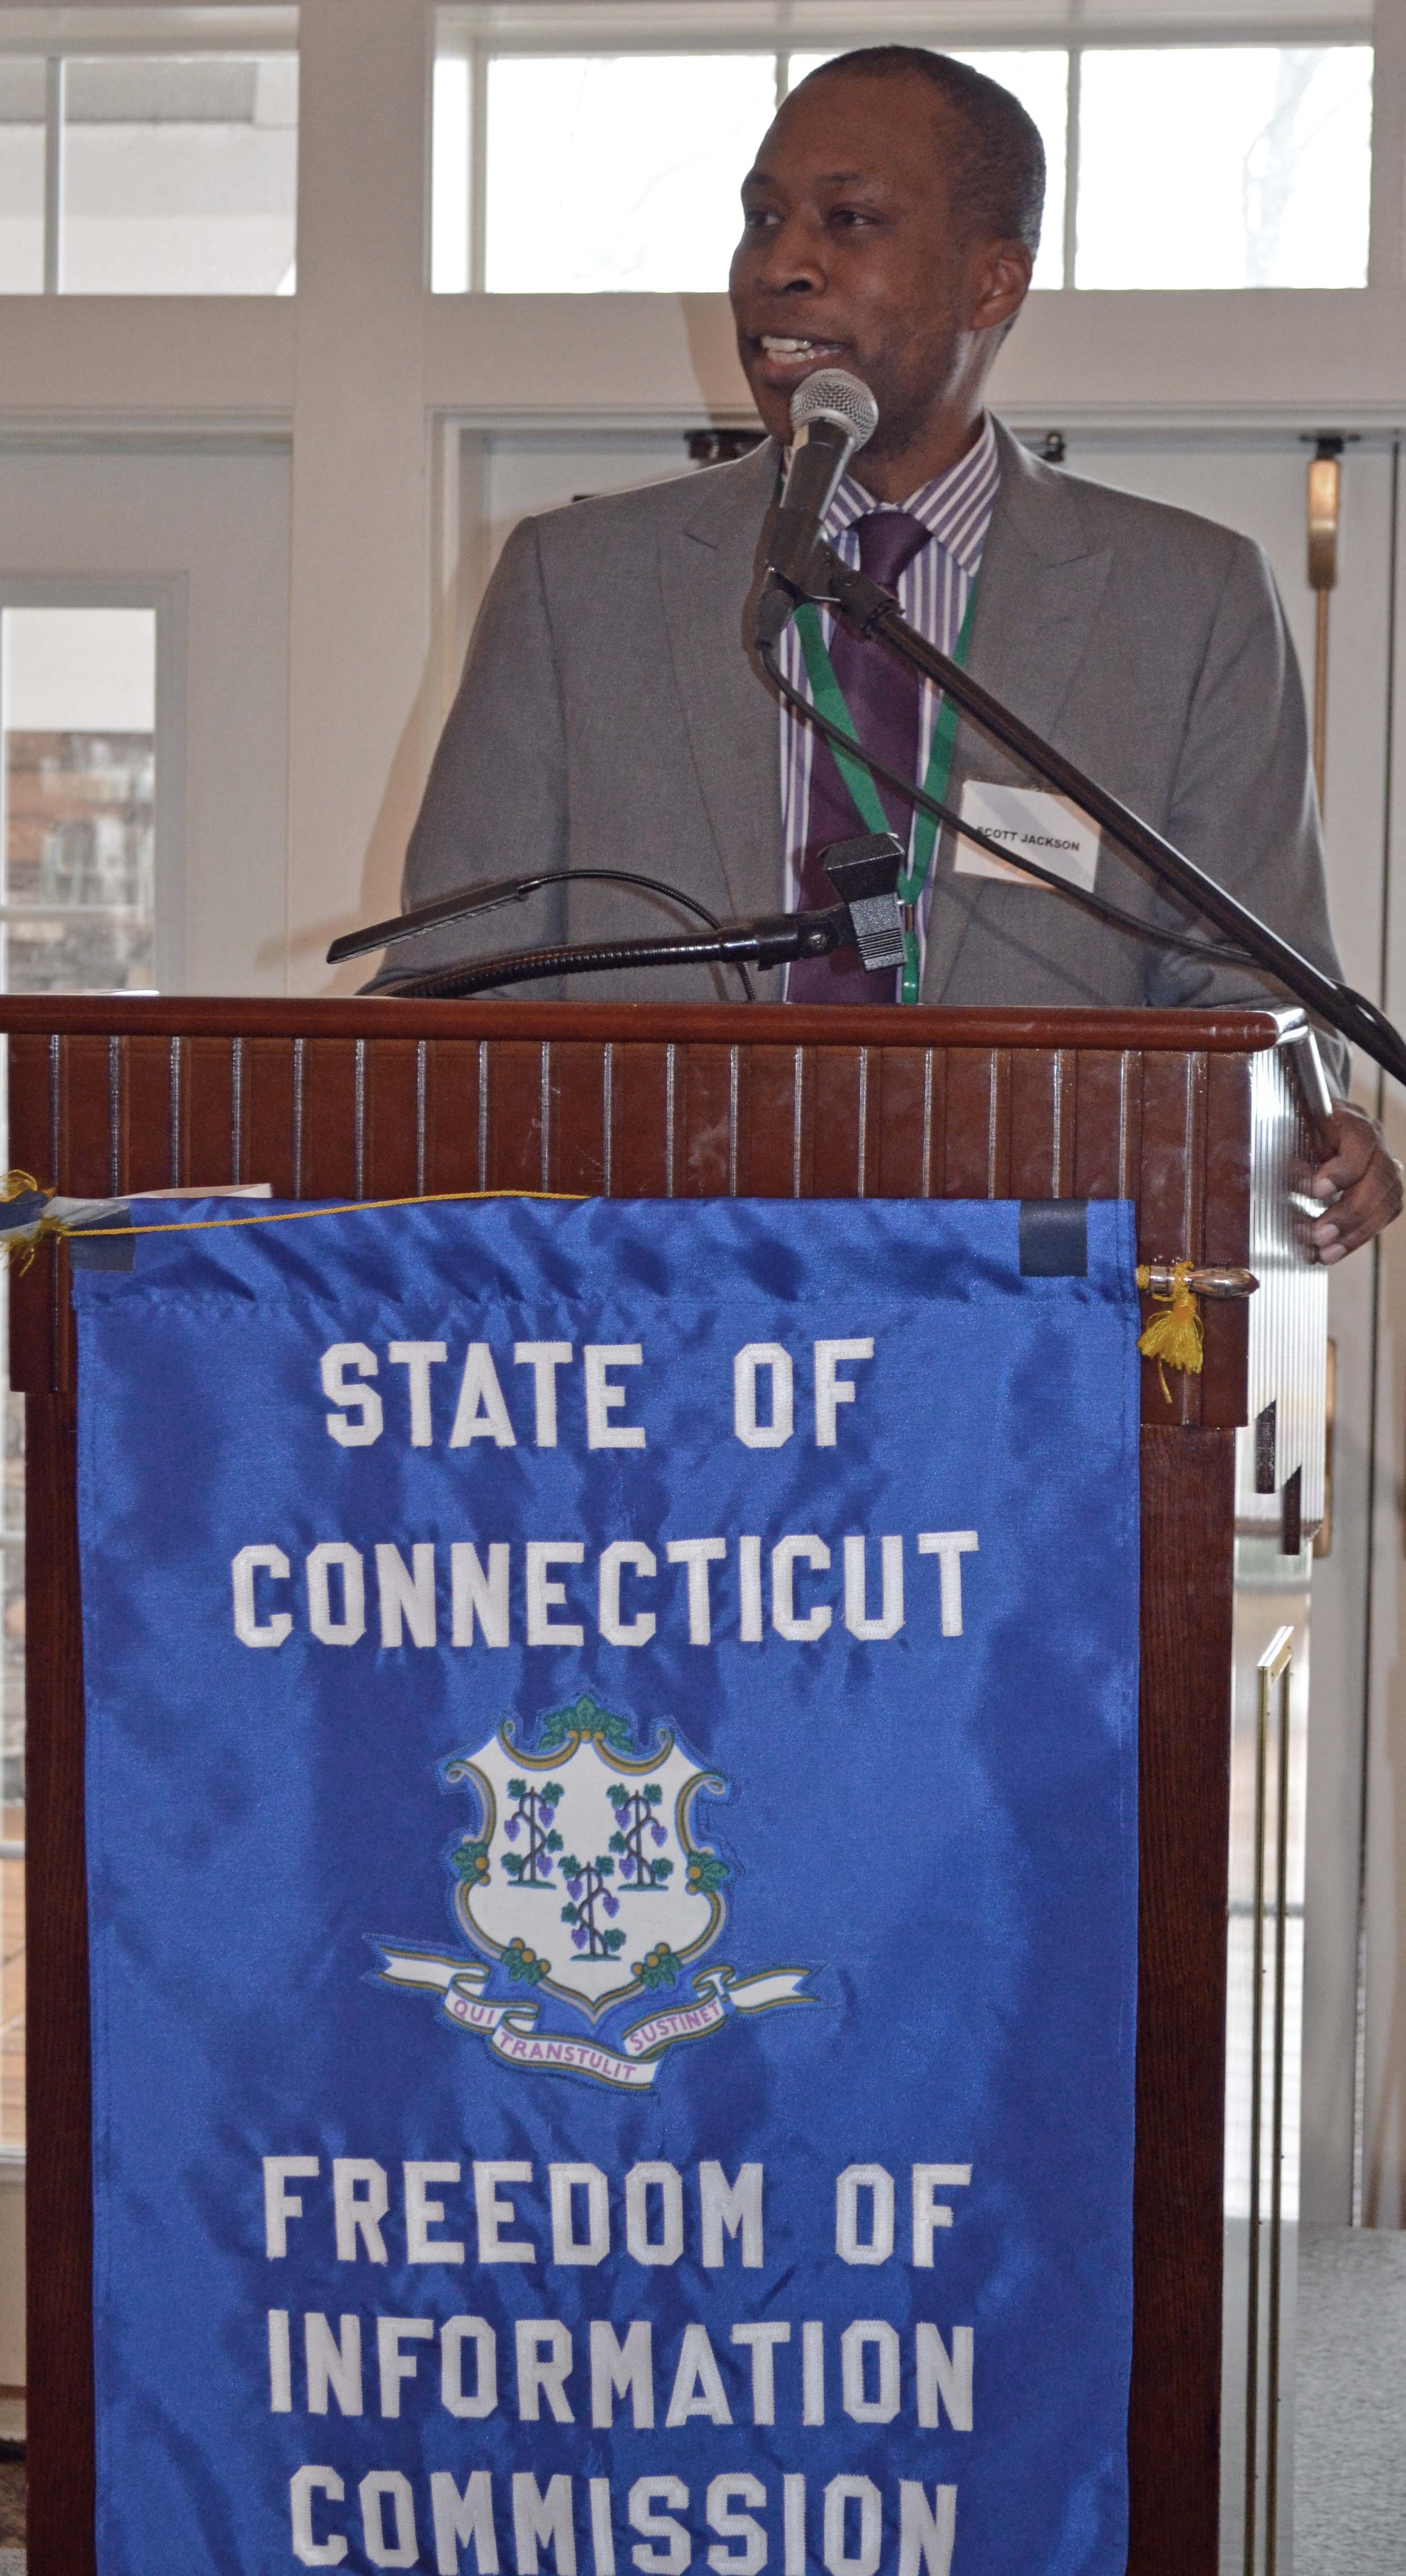 Keynote Speaker Mr. Scott Jackson, Mayor, City of Hamden, Connecticut